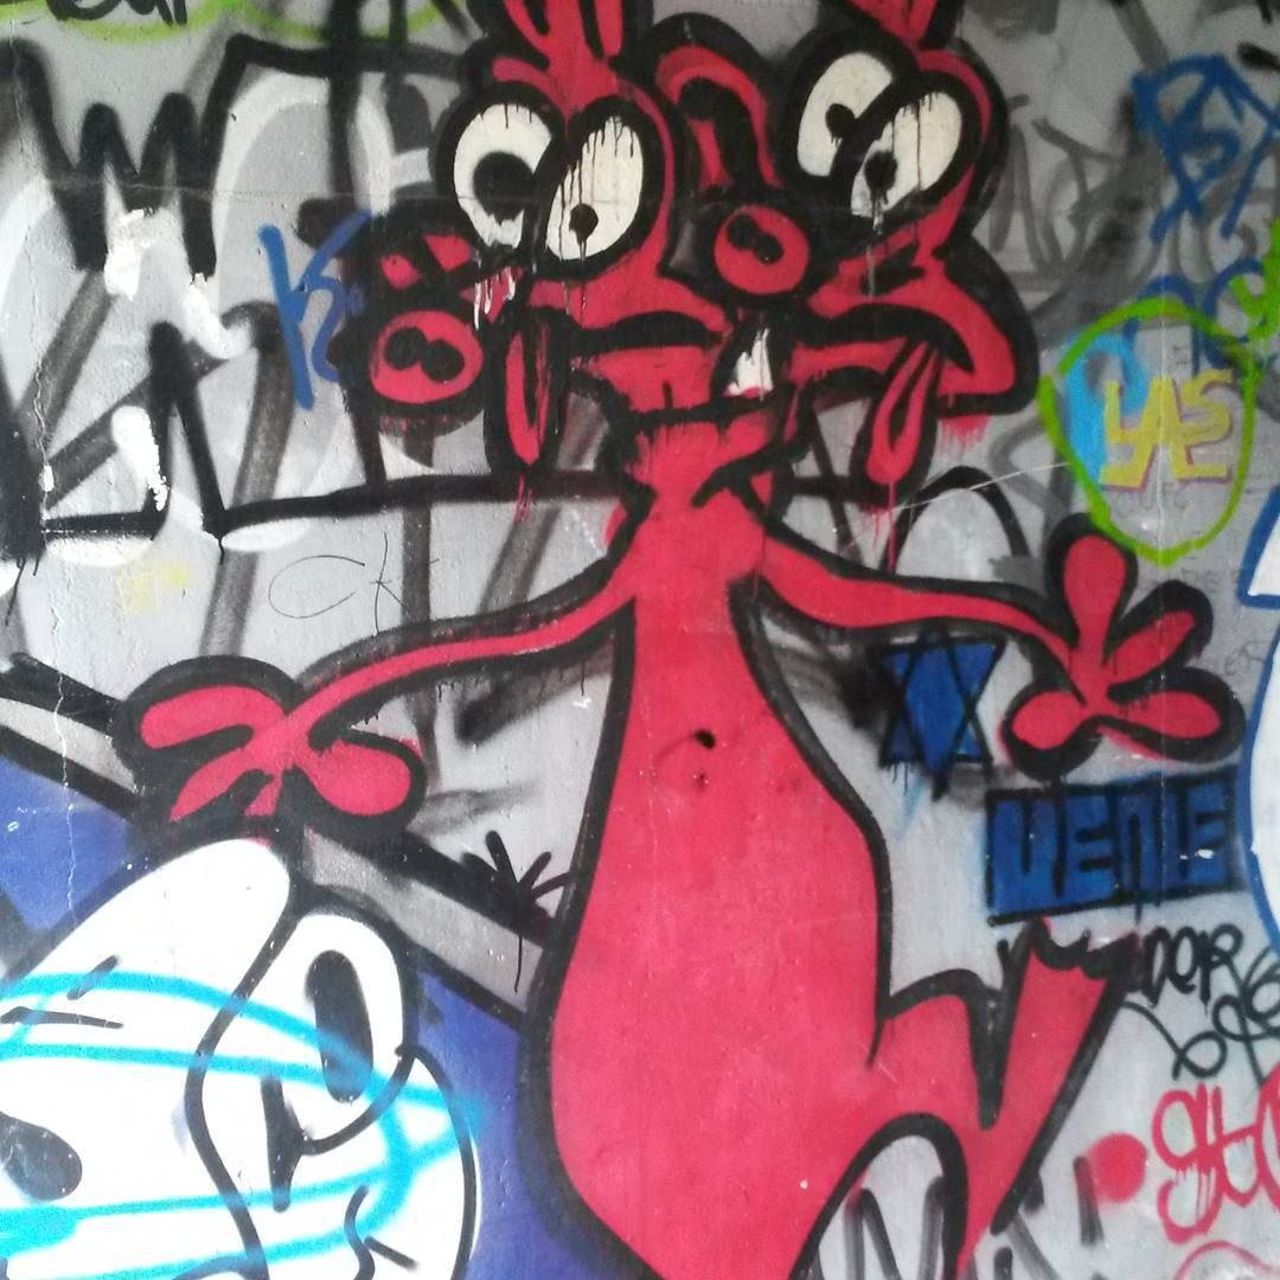 #Paris #graffiti photo by @le_cyclopede http://ift.tt/1Xiz5vU #StreetArt https://t.co/wb2JePO0df